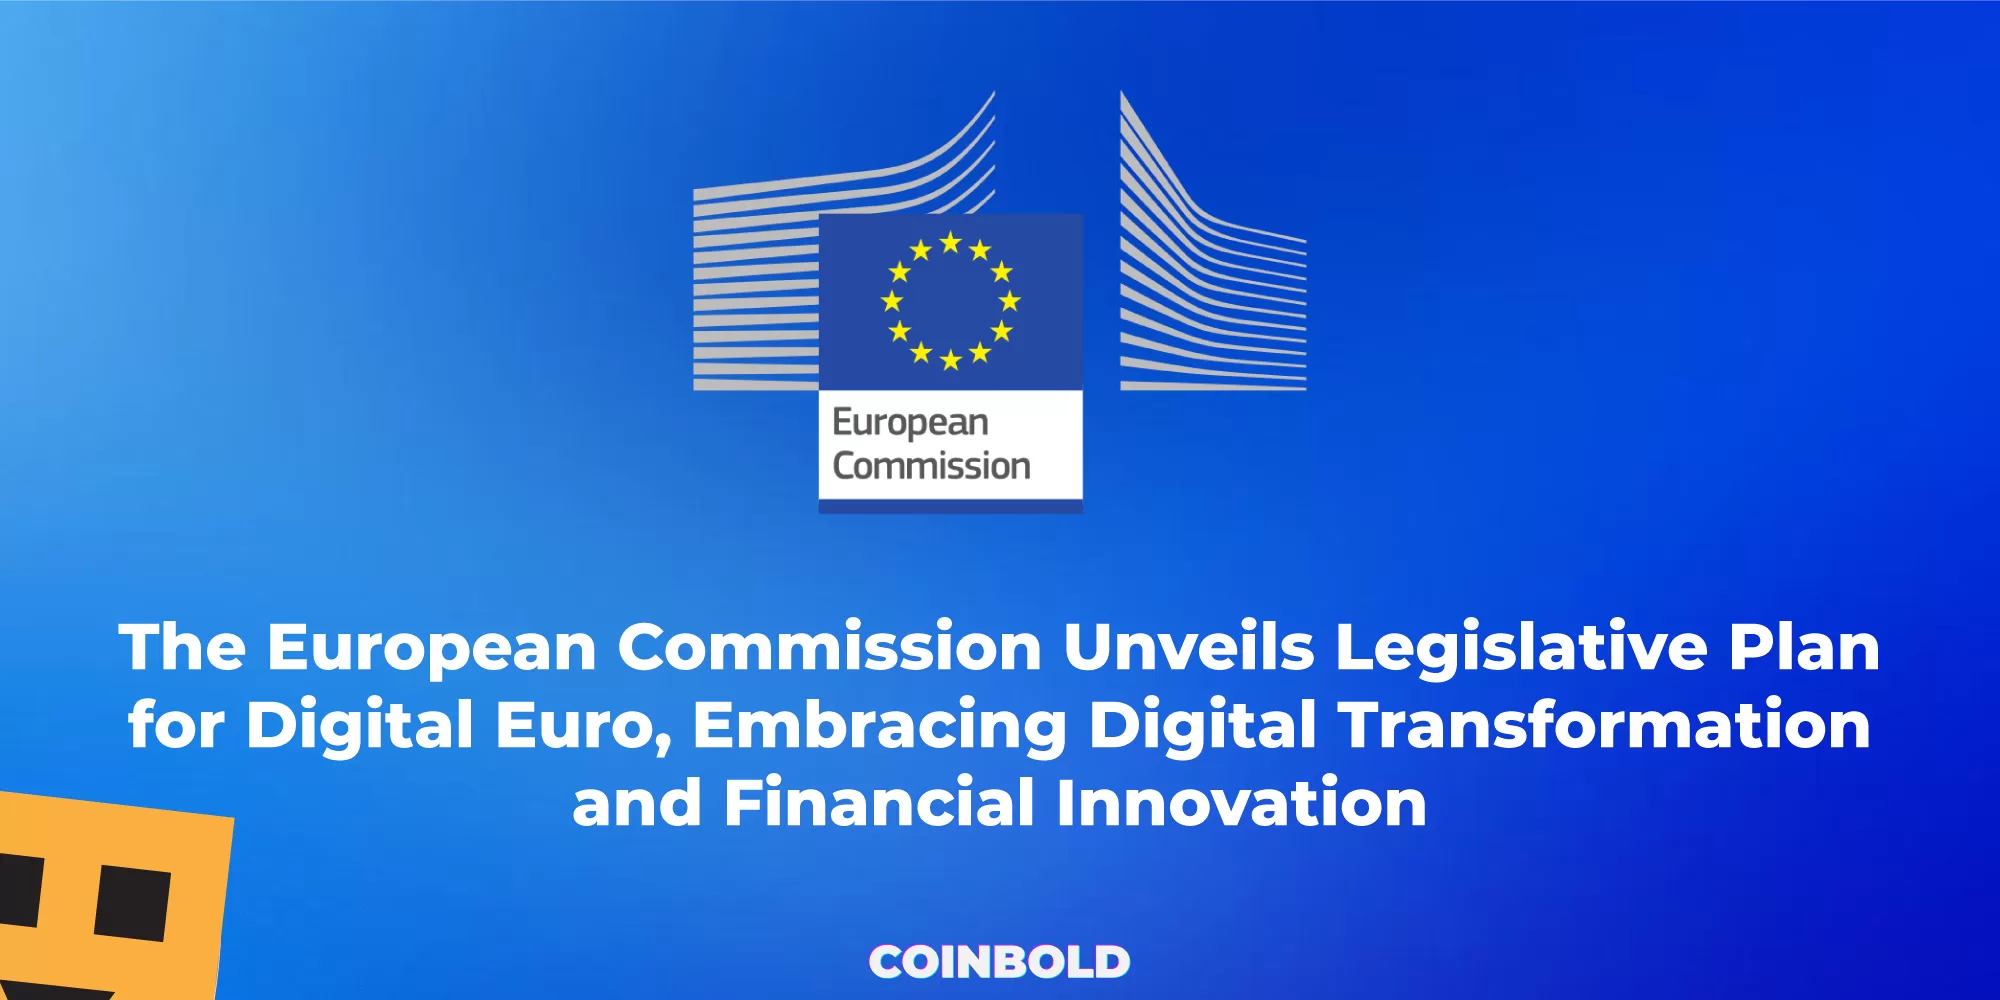 The European Commission Unveils Legislative Plan for Digital Euro, Embracing Digital Transformation and Financial Innovation